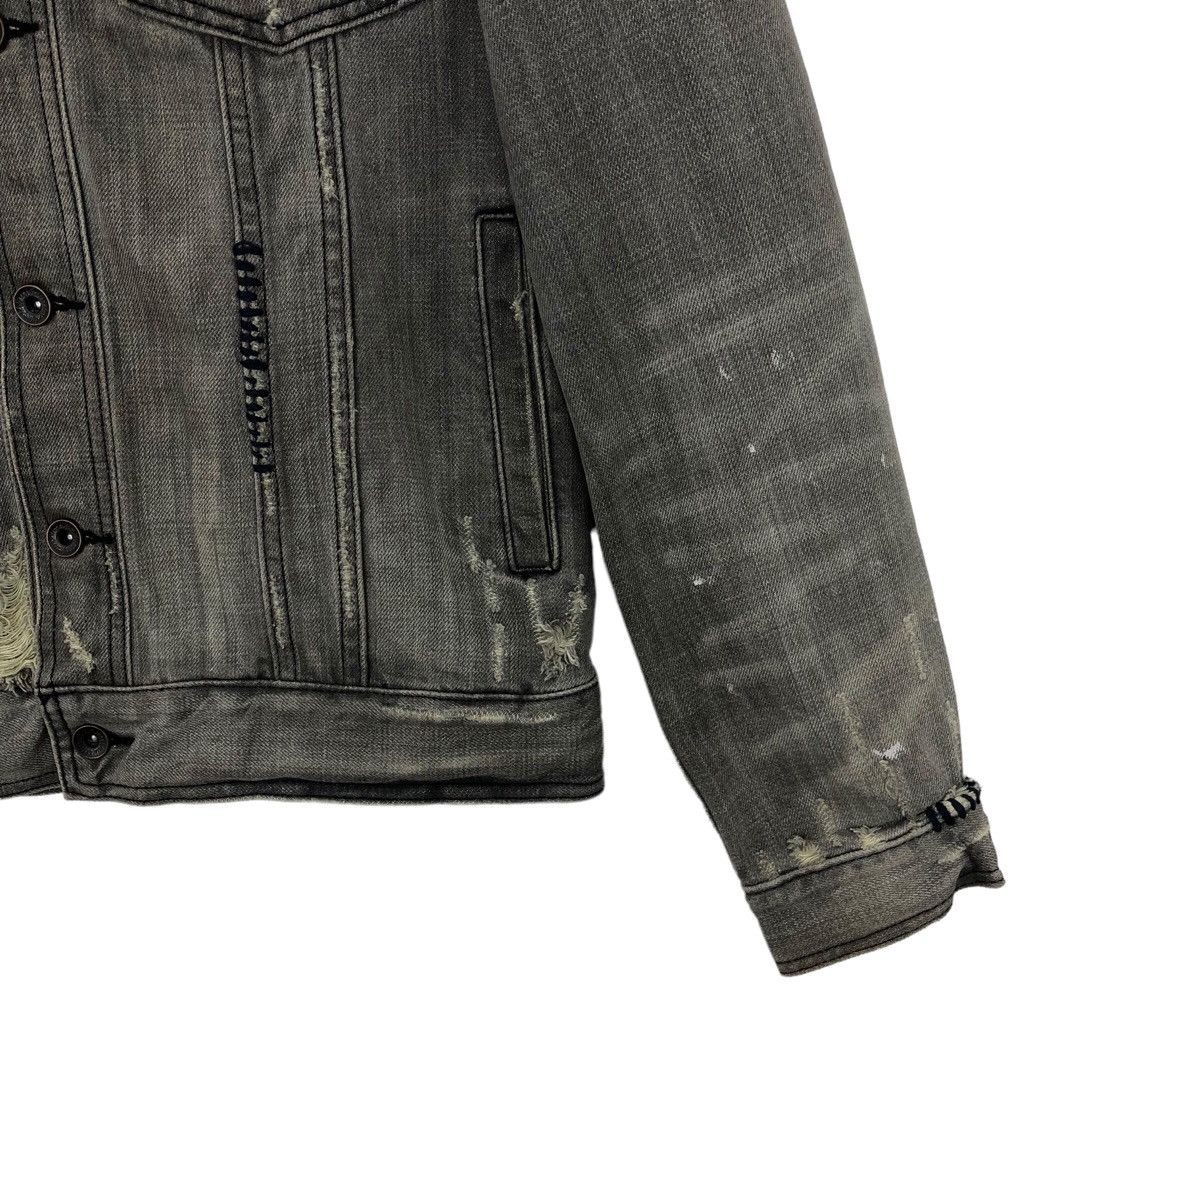 Vintage Vtg BEAMS Mineral Wash Distressed Denim Jacket Puffer Size US S / EU 44-46 / 1 - 12 Thumbnail